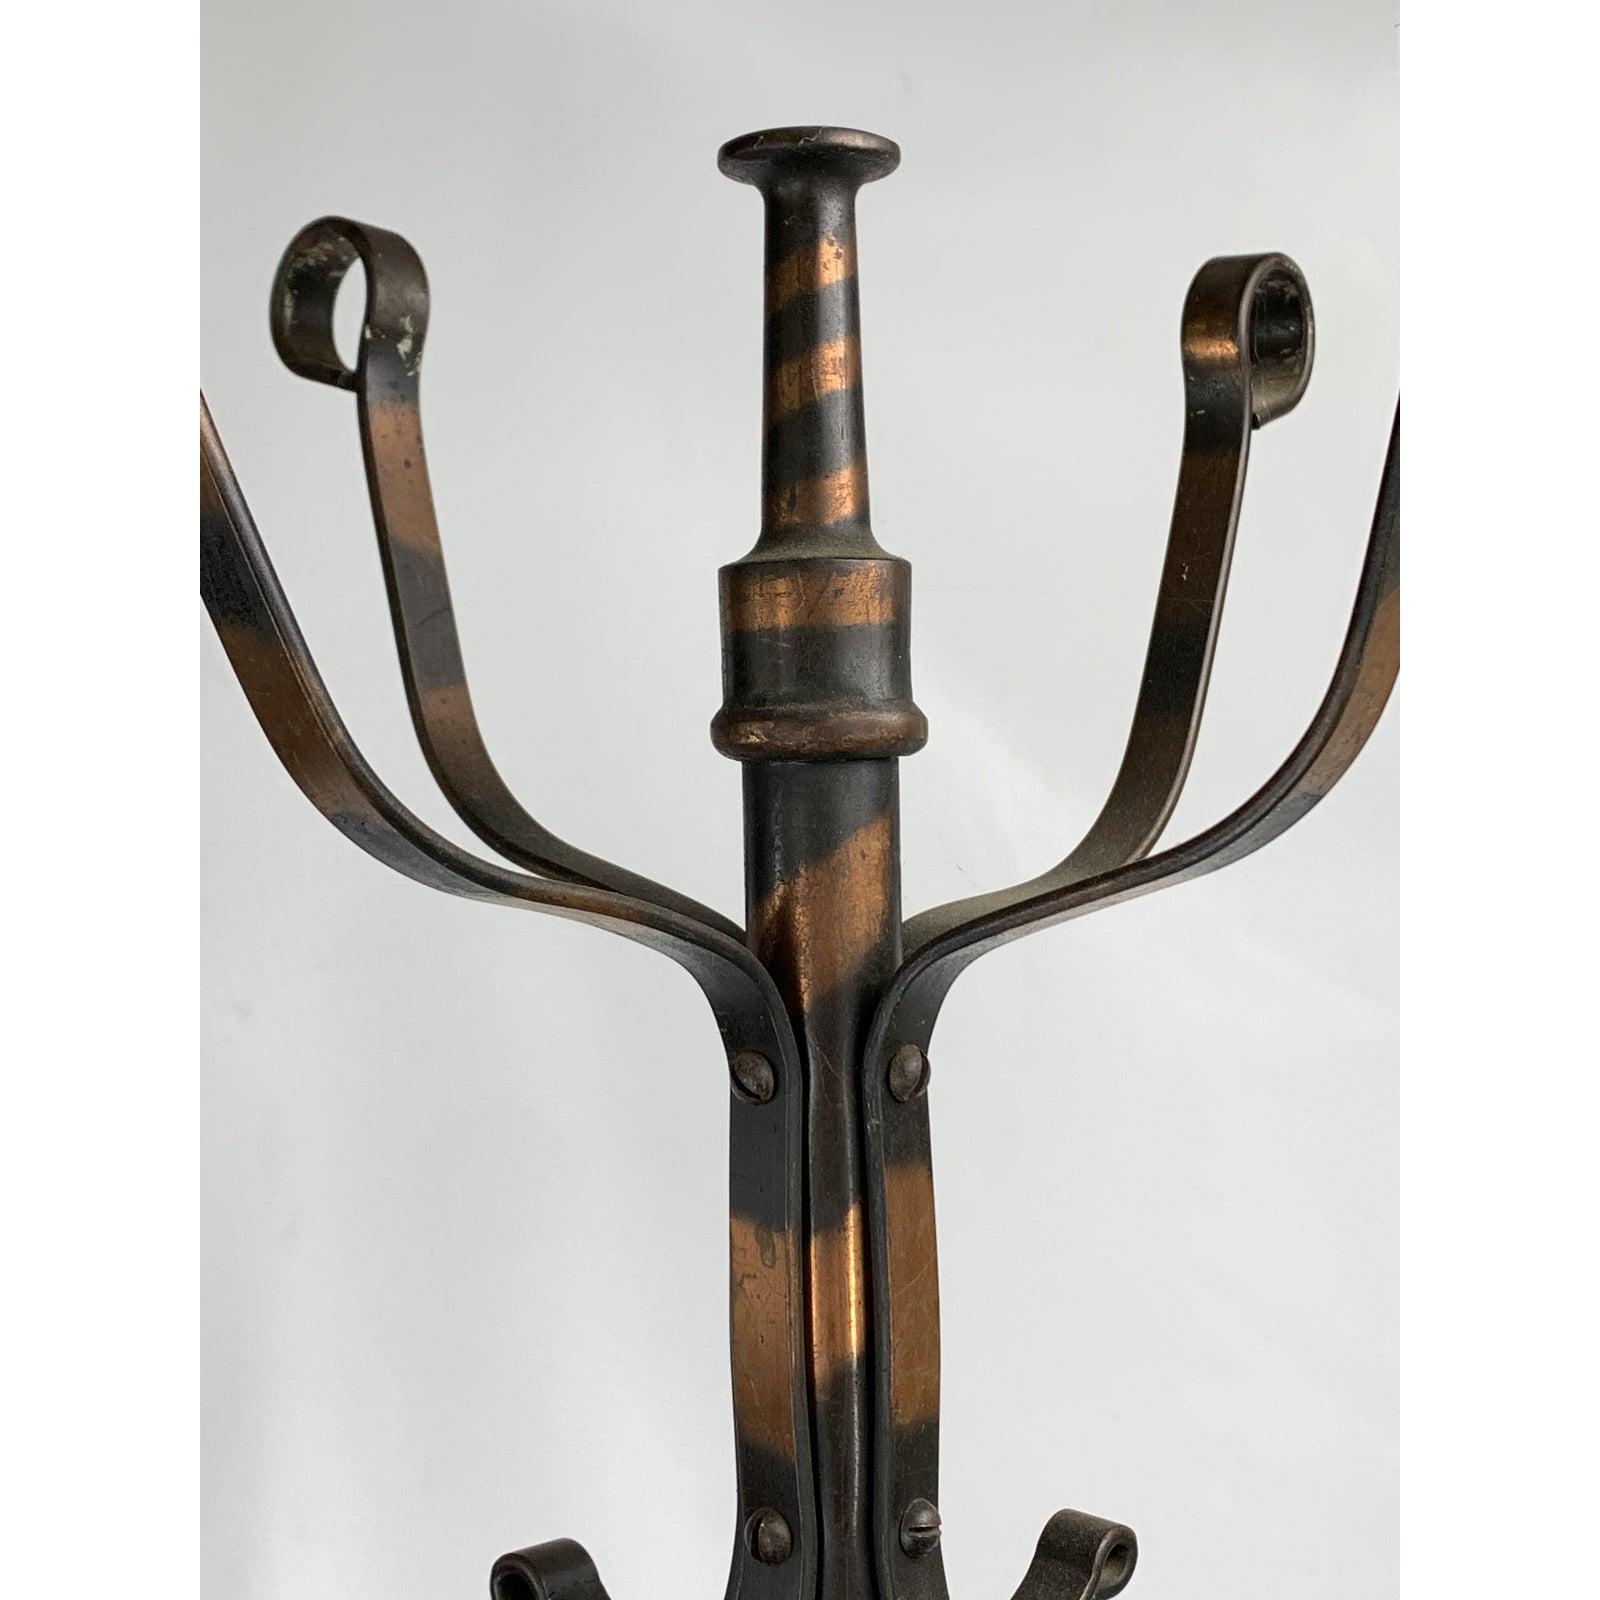 1890s high quality castiron/copper coat rack.